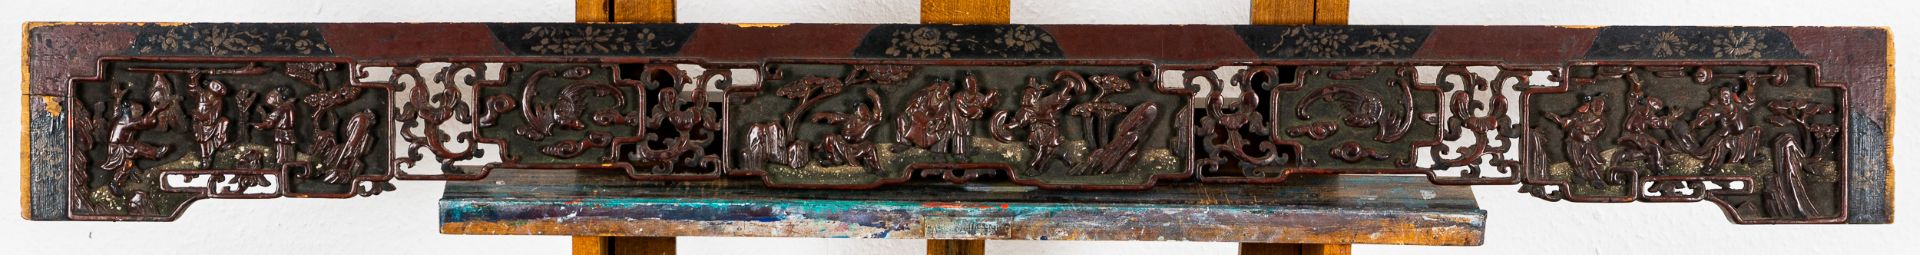 Geschnitztes antikes Wandpaneel, China, Qing - Dynastie.  Das Wandpaneel mit 5 figural beschnitzten